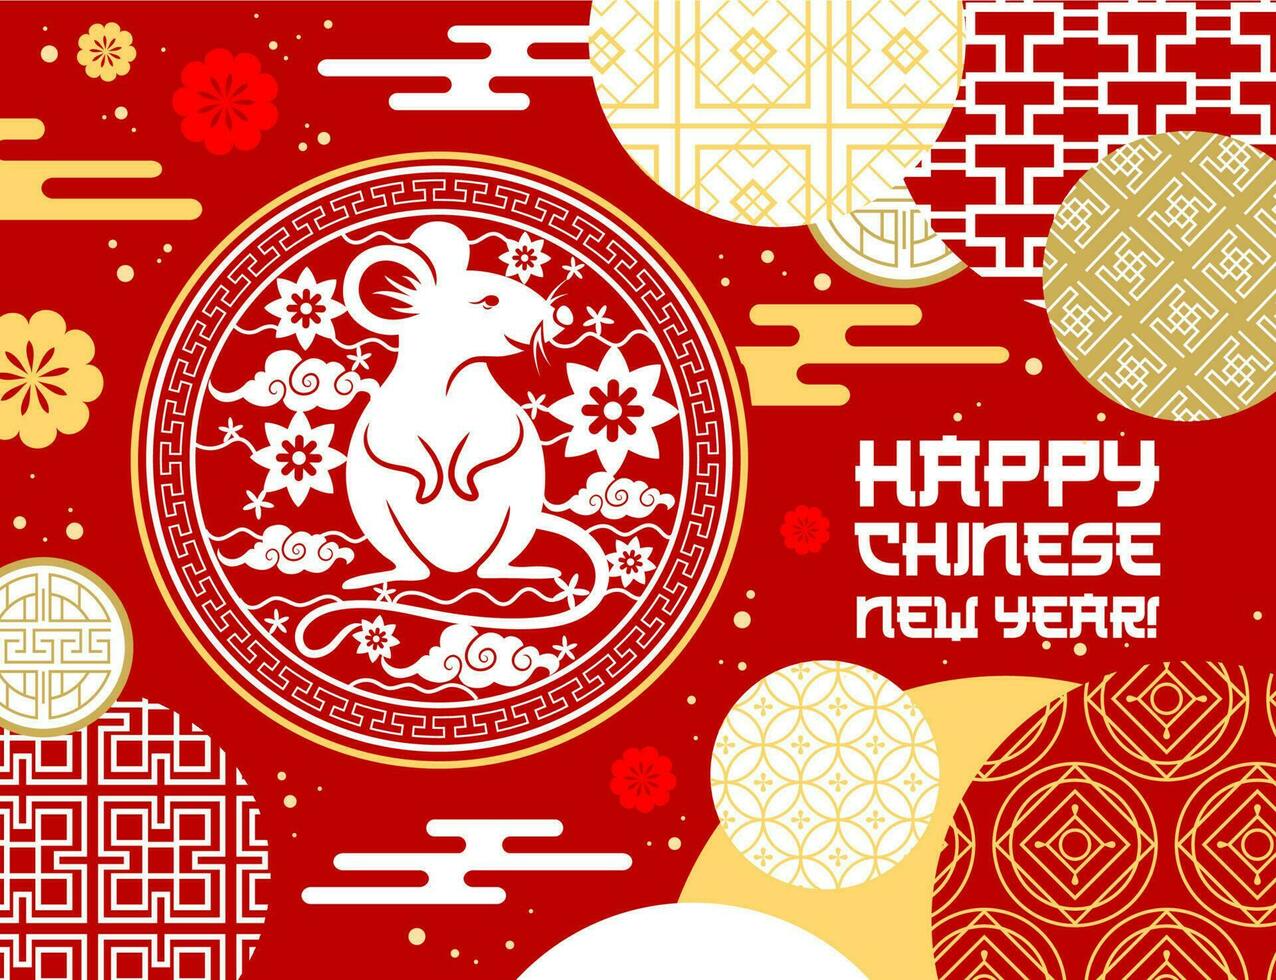 kinesisk djur- zodiaken råtta kort av lunar ny år vektor